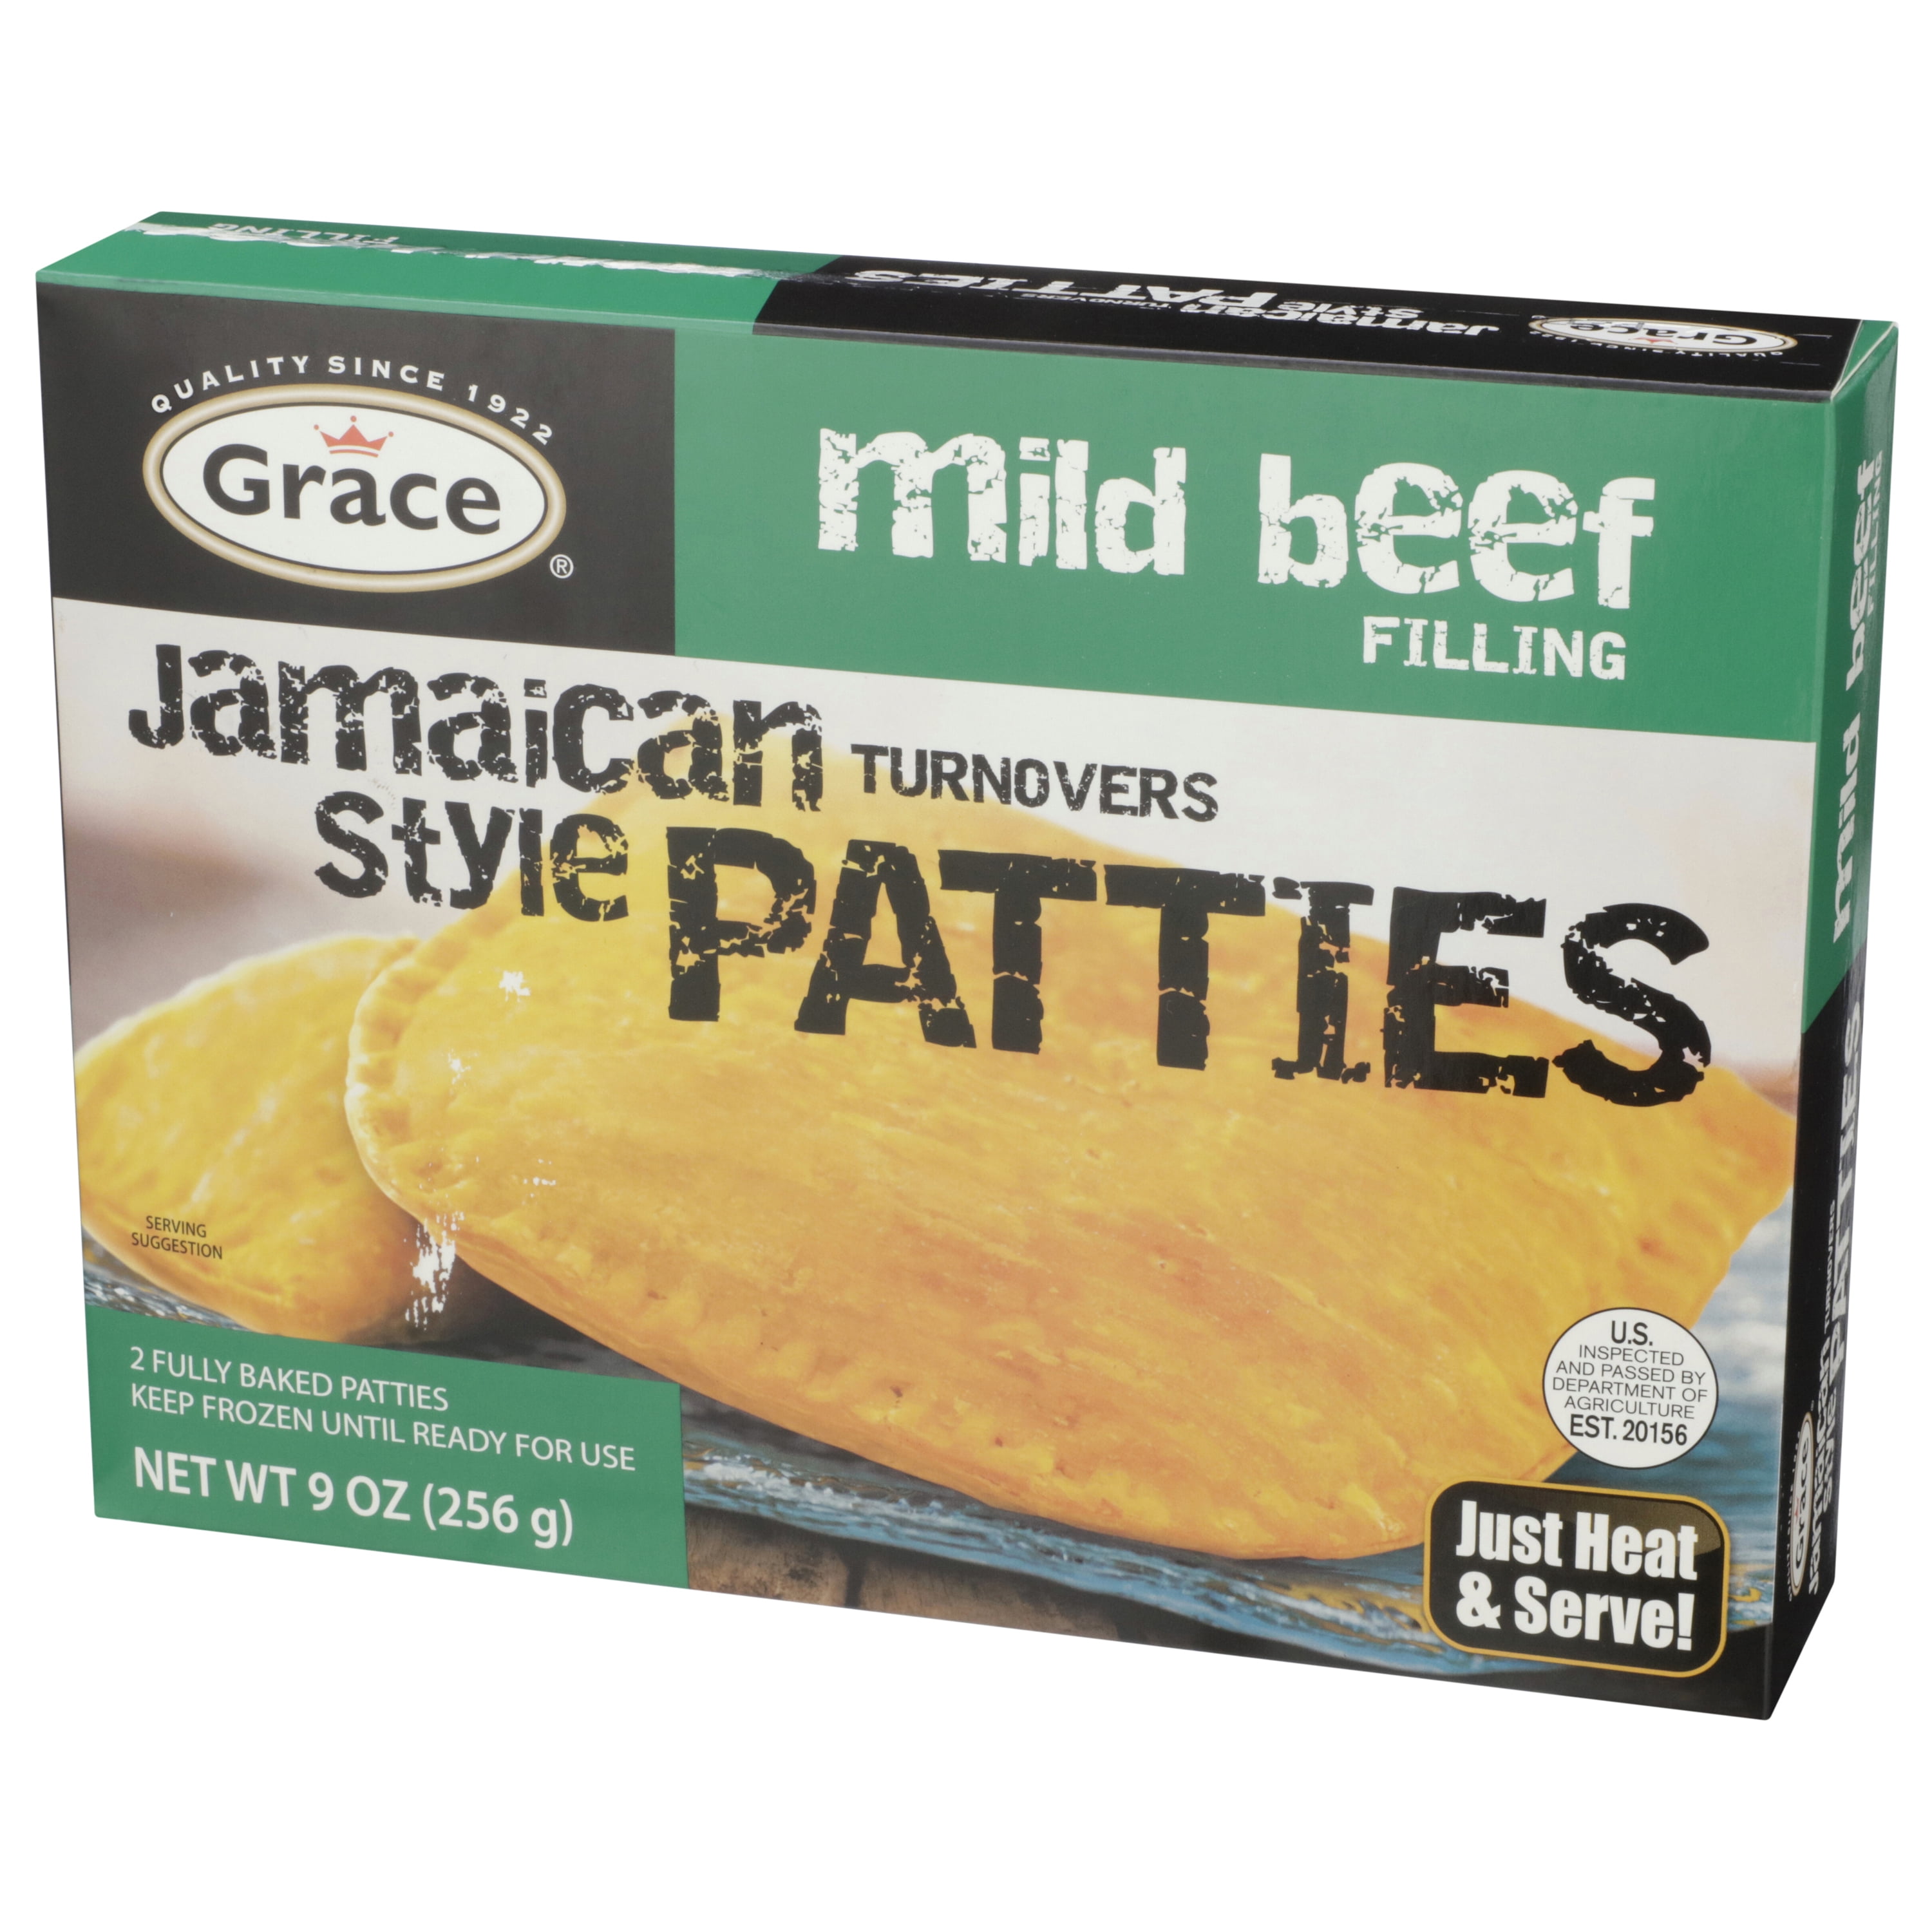 The Best Ever Oven Baked Jamaican Beef Patties - Adventures of a Nurse